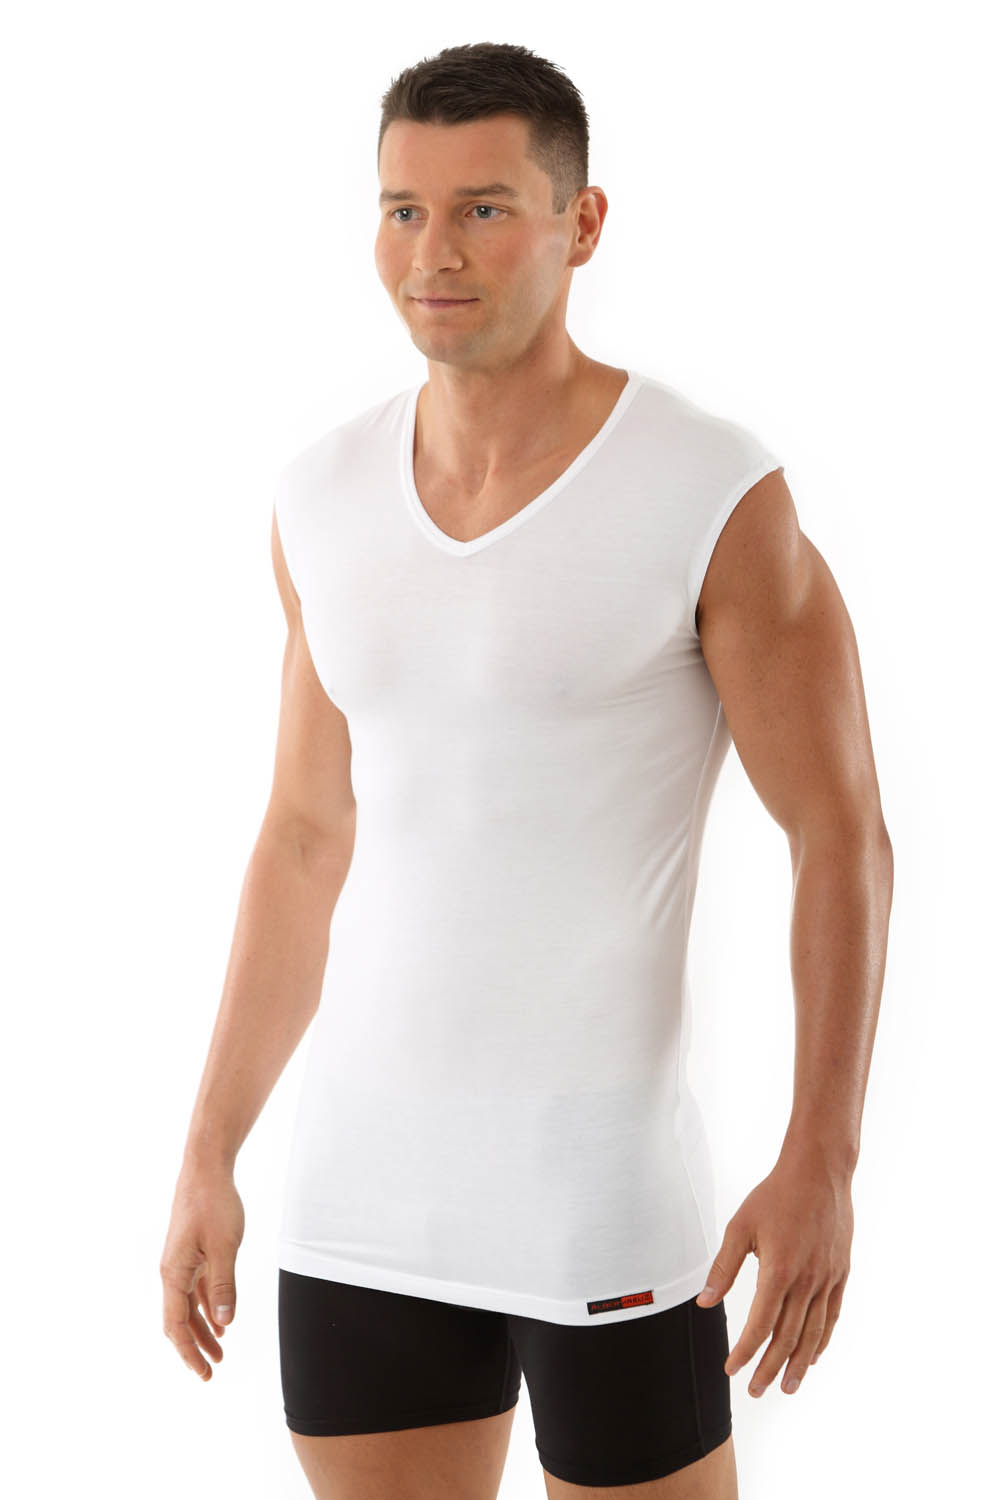 Men's sleeveless v-neck undershirt 